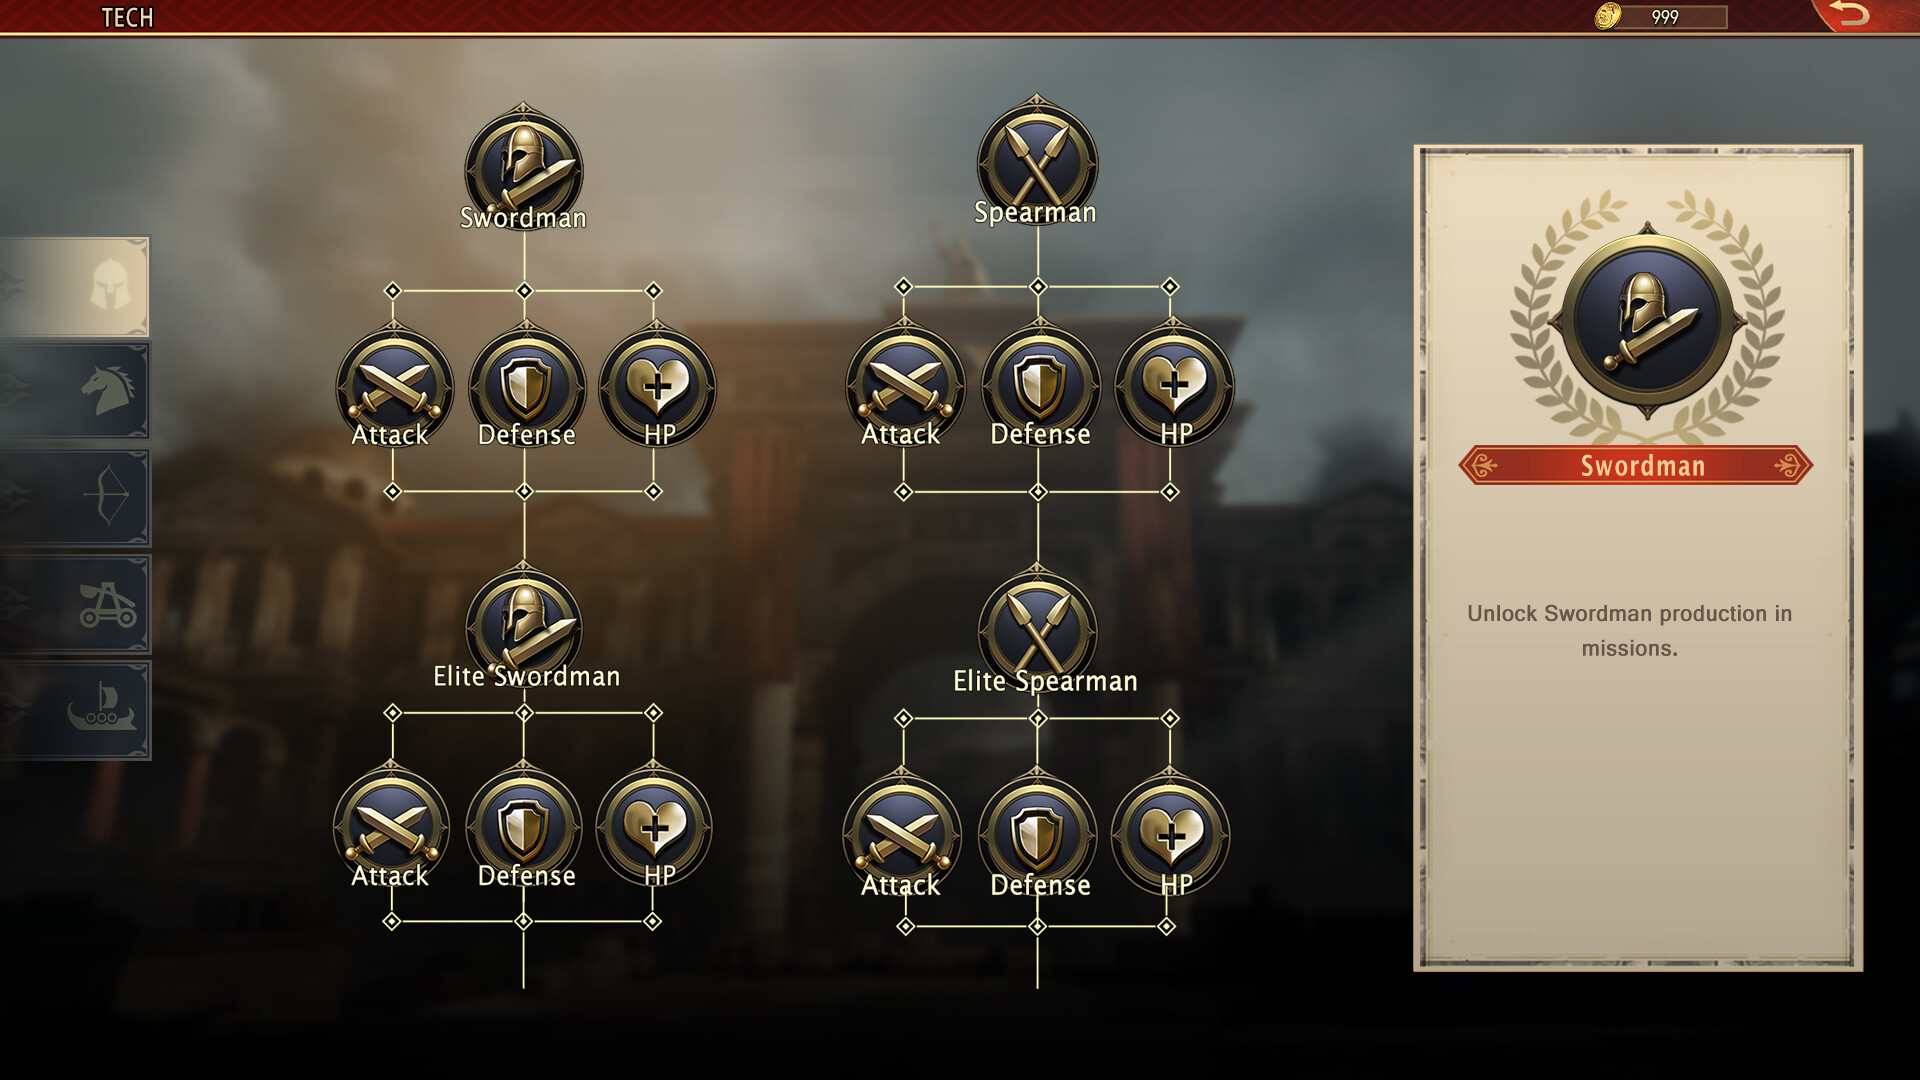 Grand War: Rome Steam CD Key